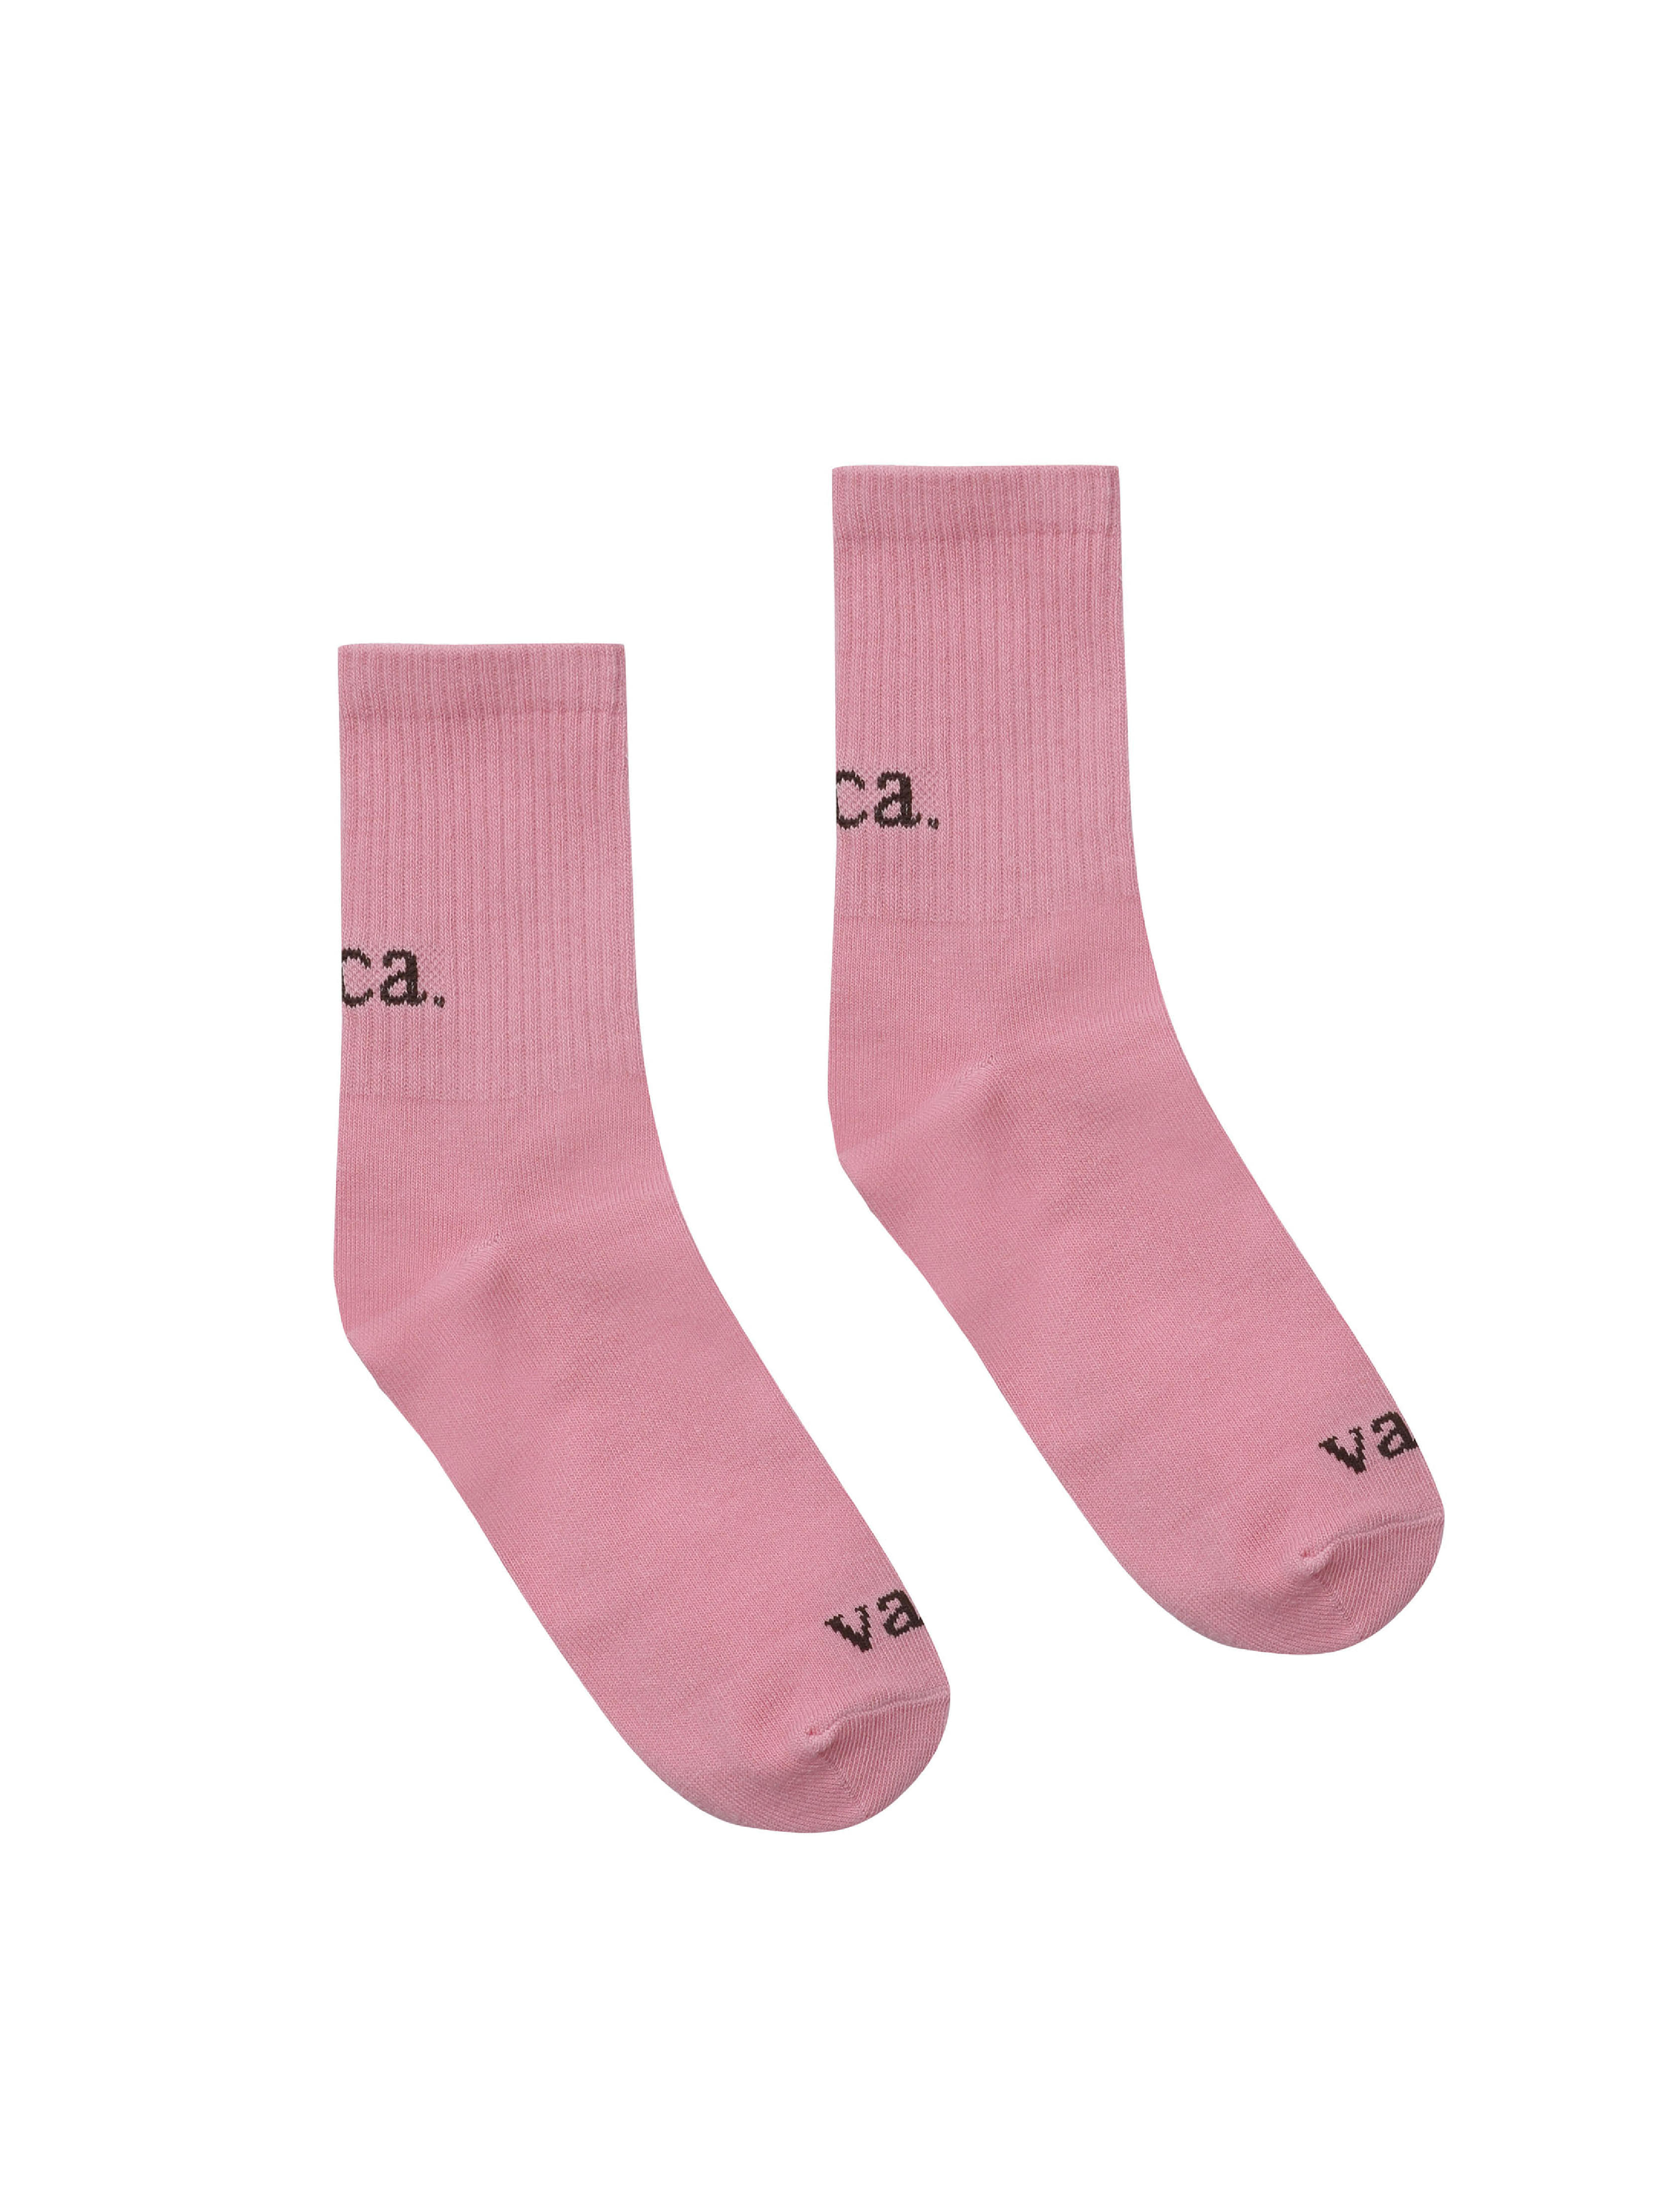 Vaca Pink Socks